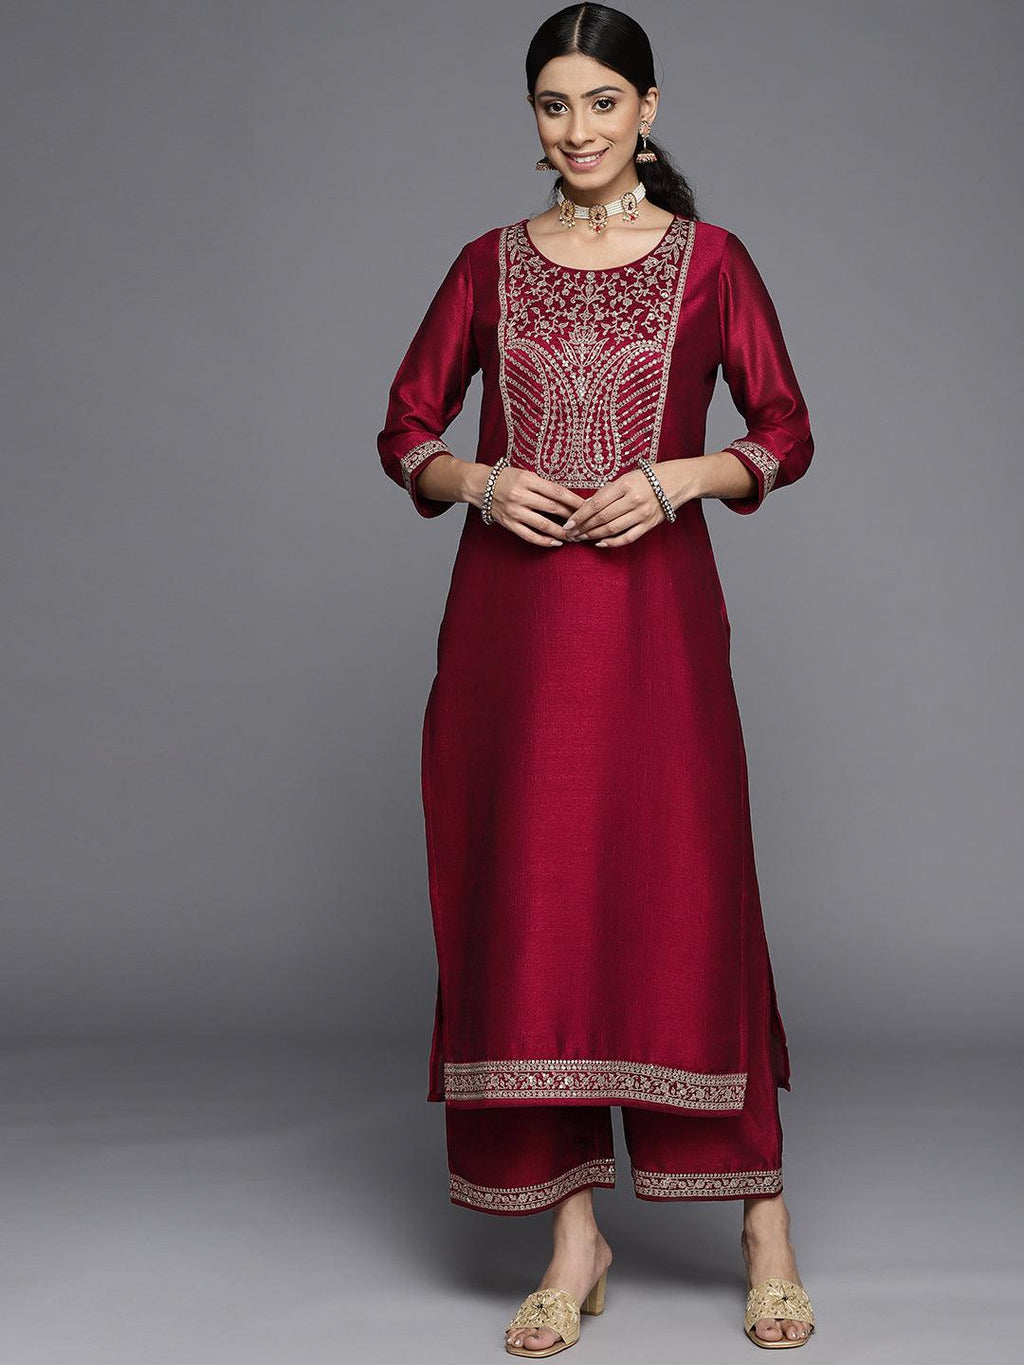 New ISAAC TAMARI Women Gold Brown Beaded Polyester Shiny Collarless Dress  SZ 18 | eBay